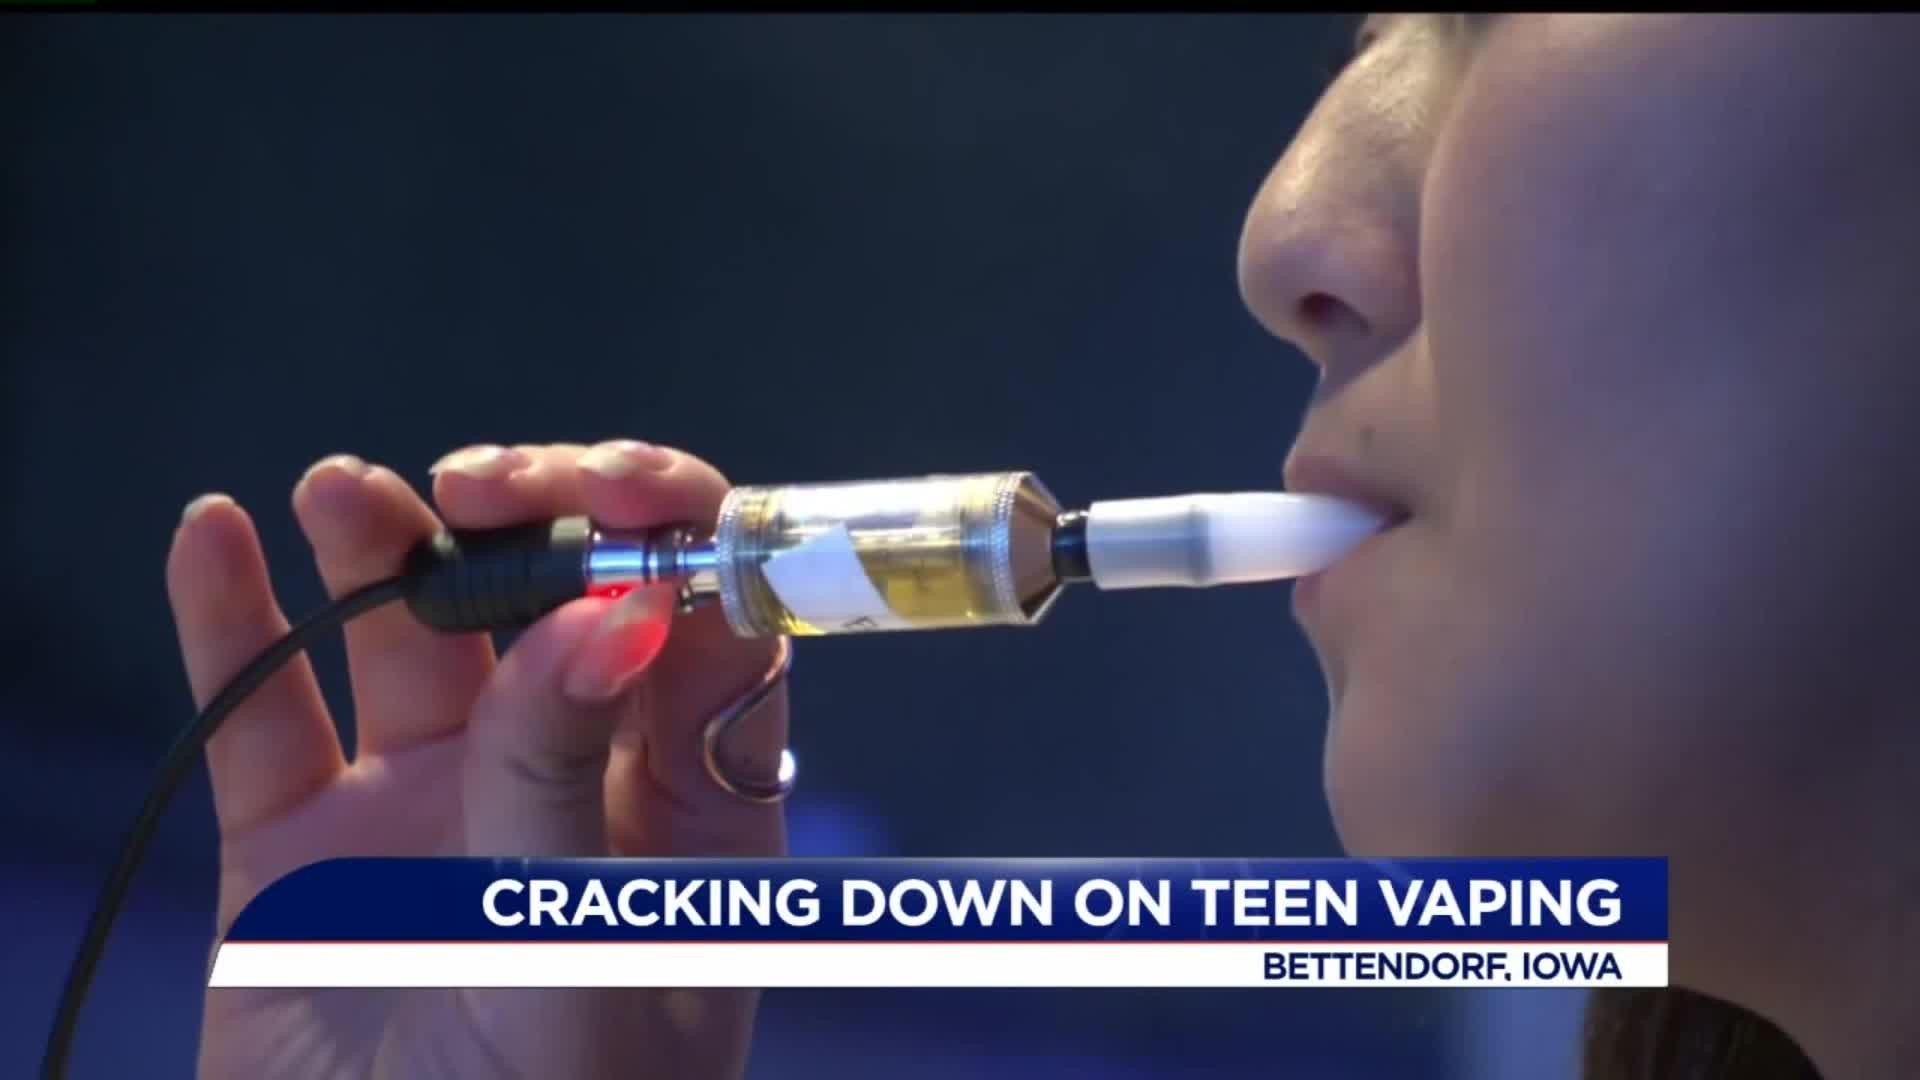 Iowa State Patrol to help crackdown on teen vaping